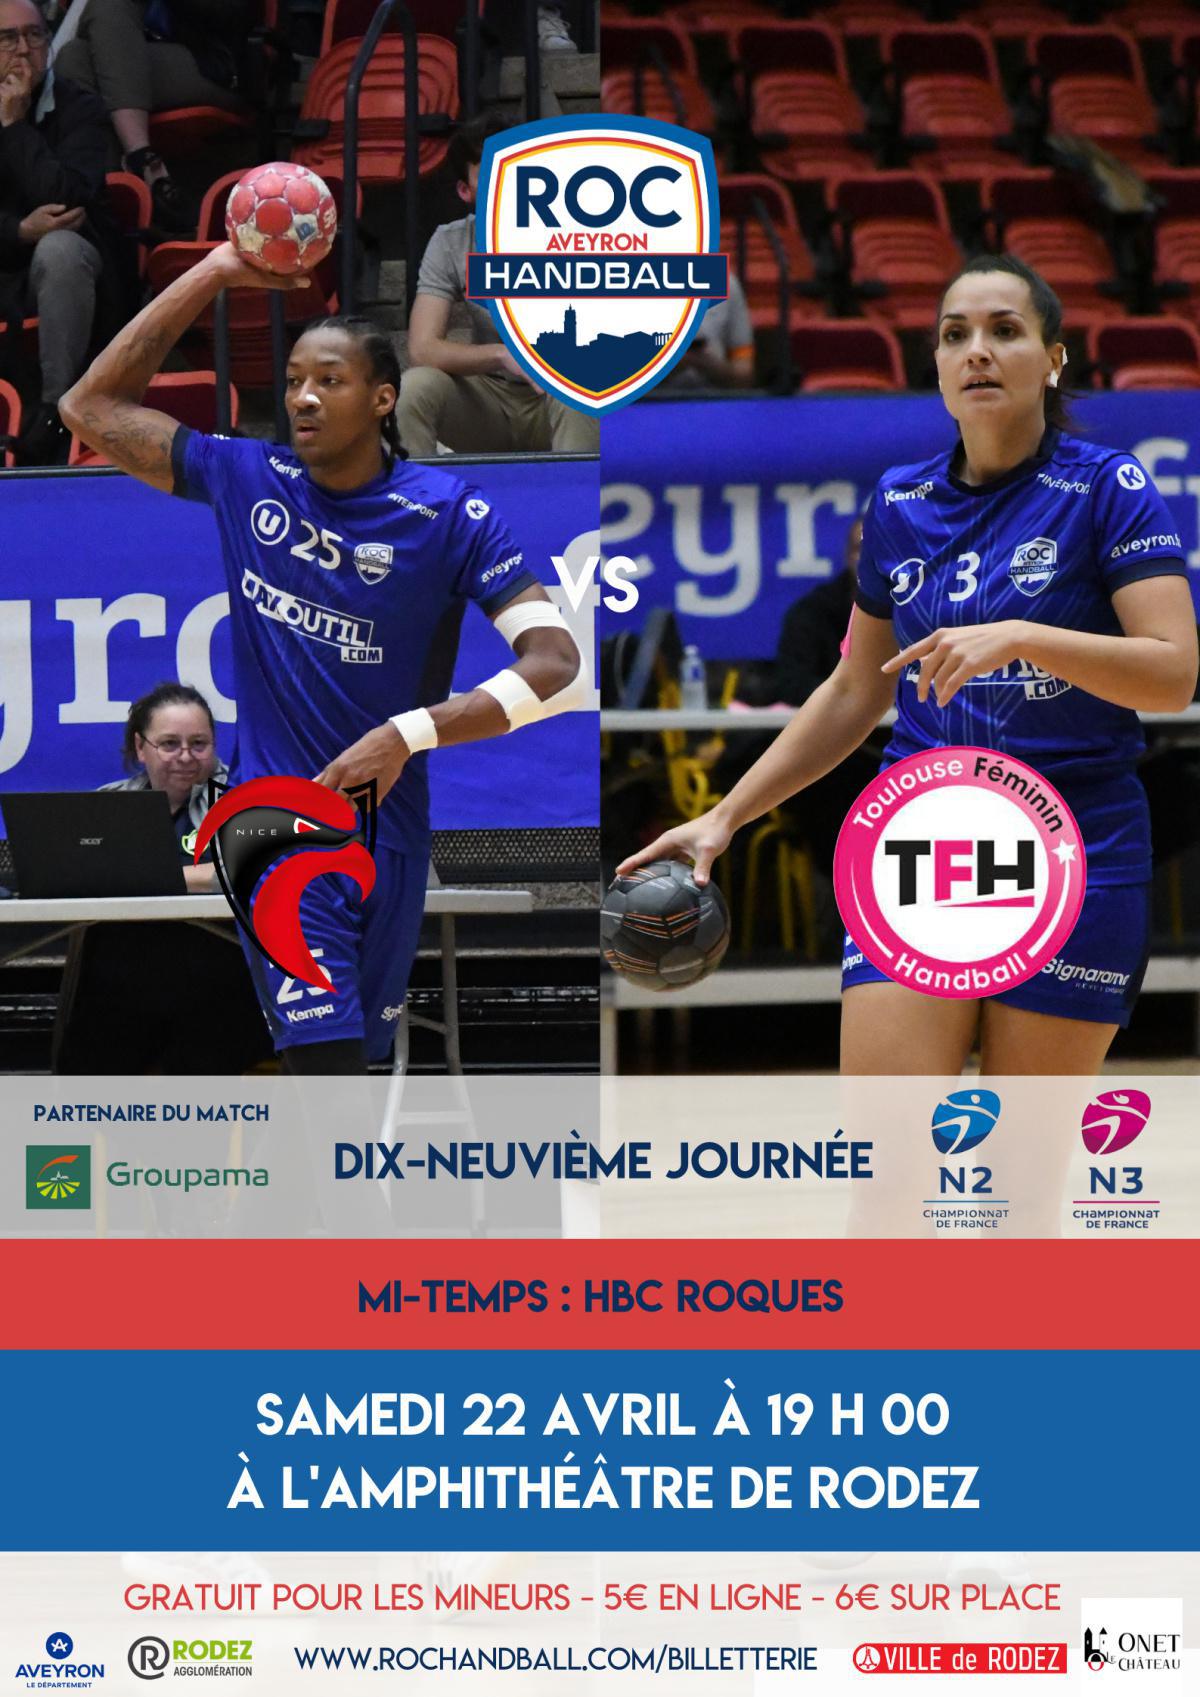 ROC - Cavigal Nice / ROC - Toulouse Féminin Handball